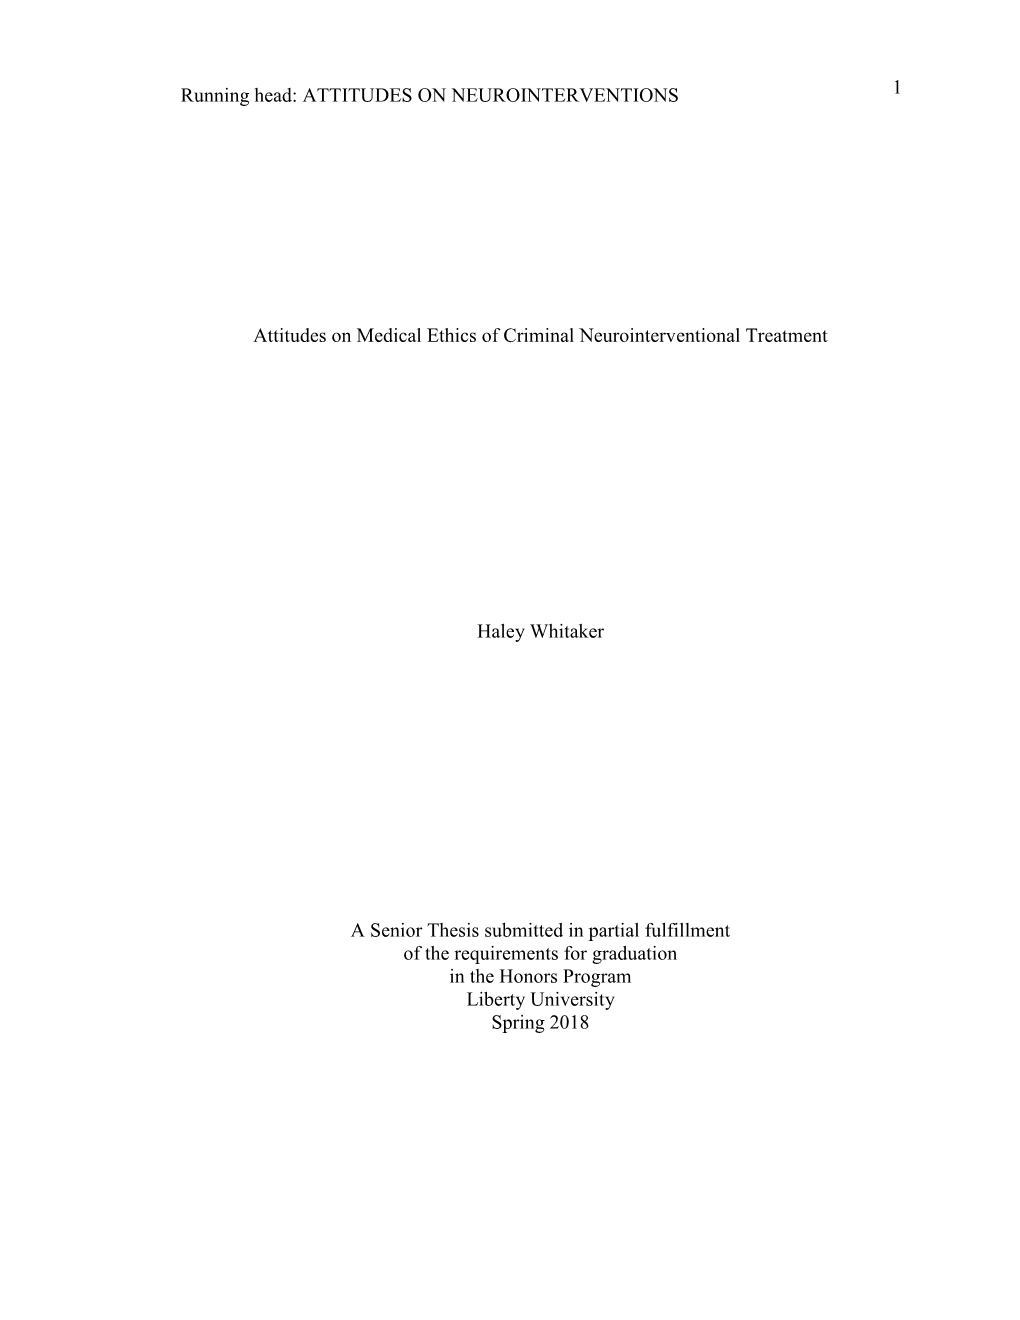 Attitudes on Medical Ethics of Criminal Neurointerventional Treatment